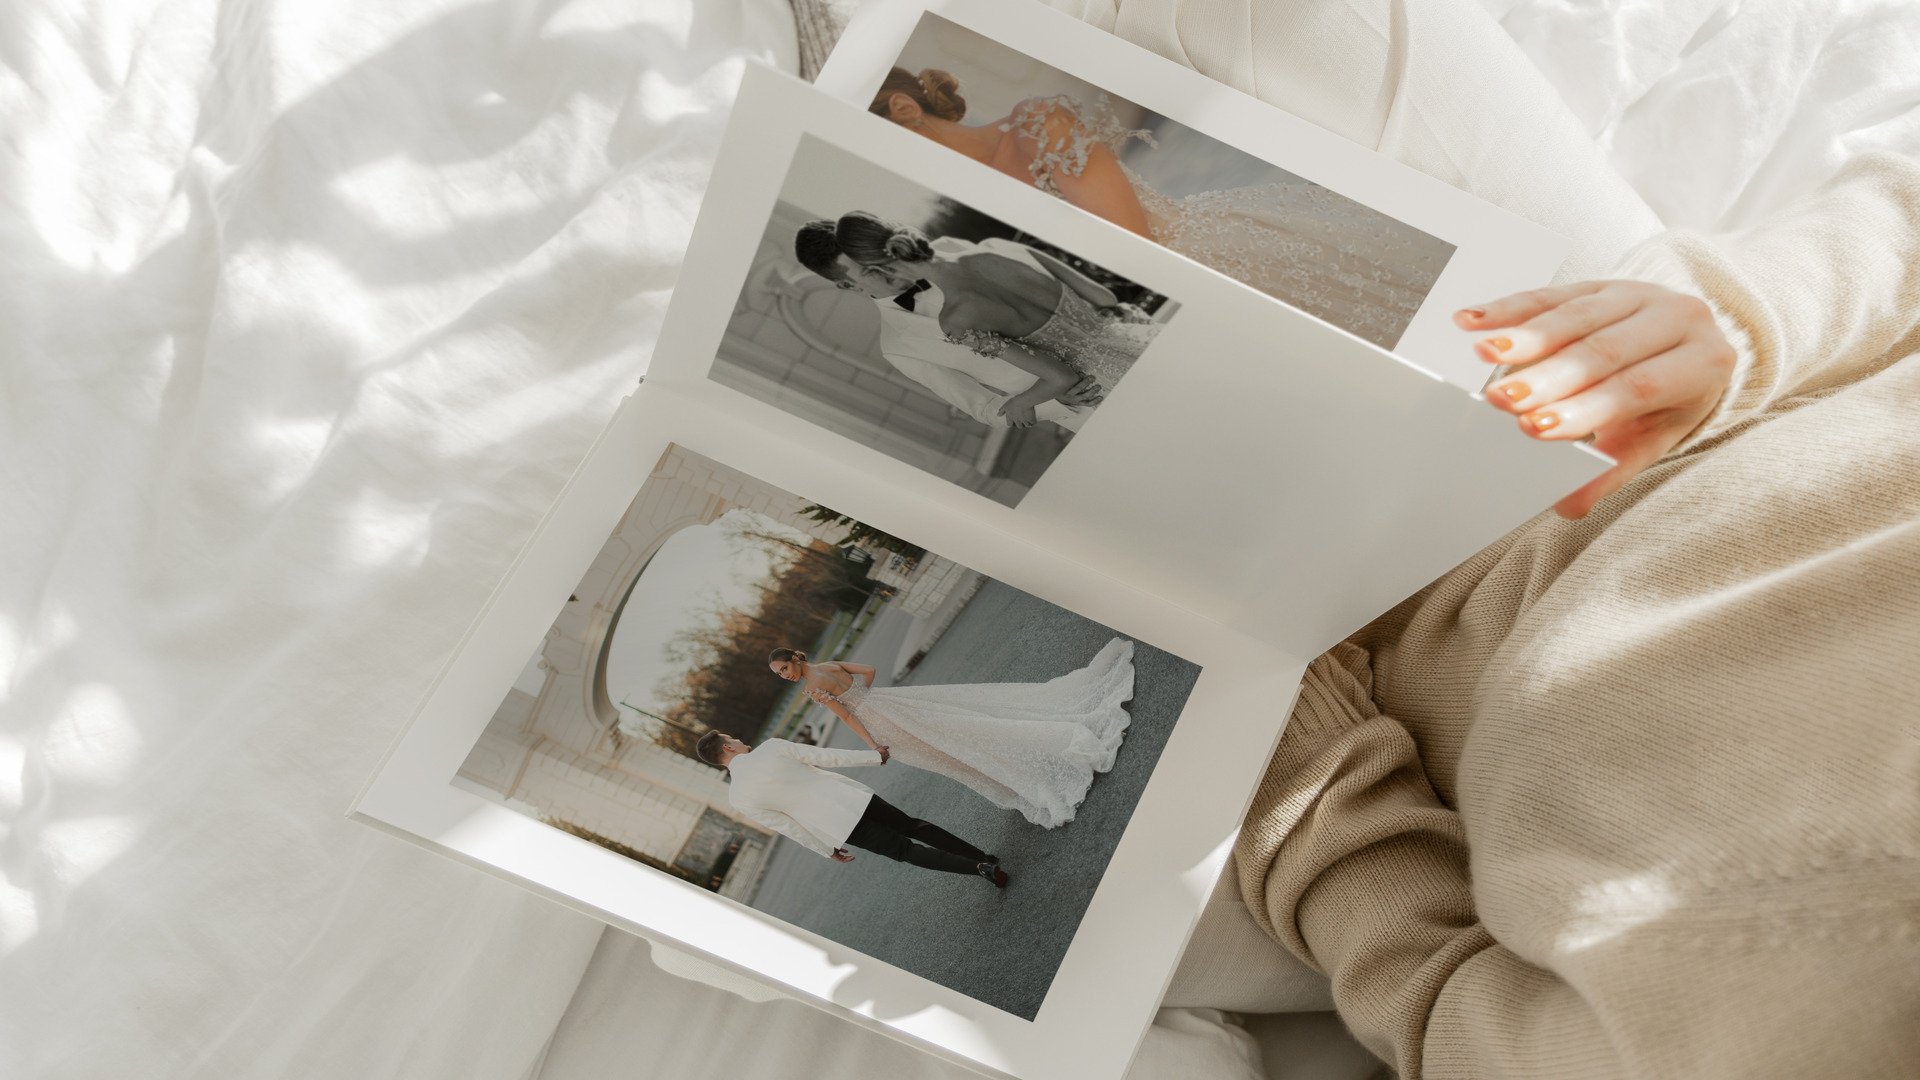 How to Organize a Wedding Album: 3 Tips to Make Your Photo